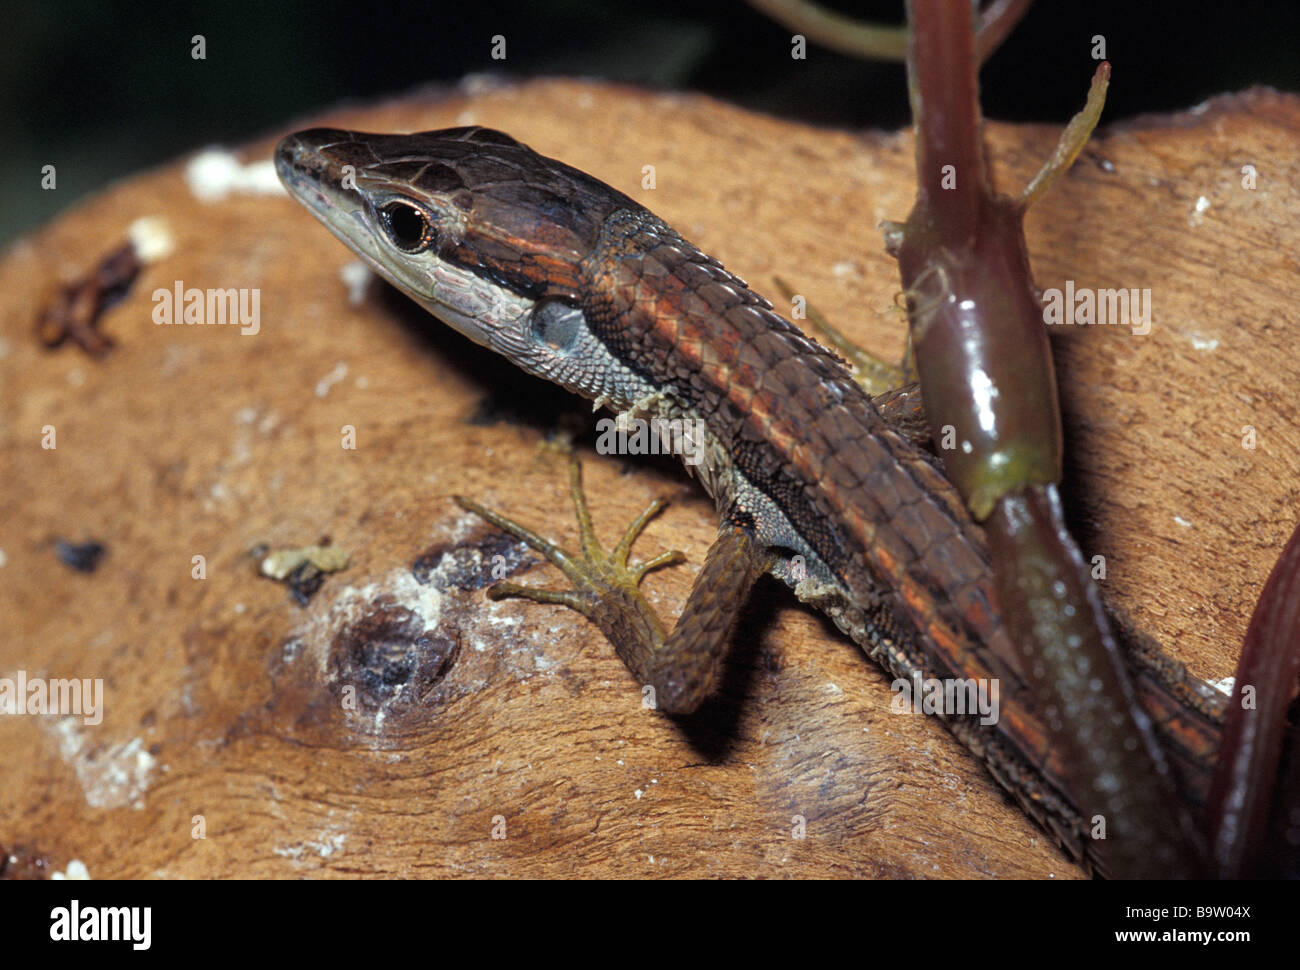 Long-tailed Grass Lizard Takydromus sexlineatus, Sauria, Asia, Lacertidae Stock Photo